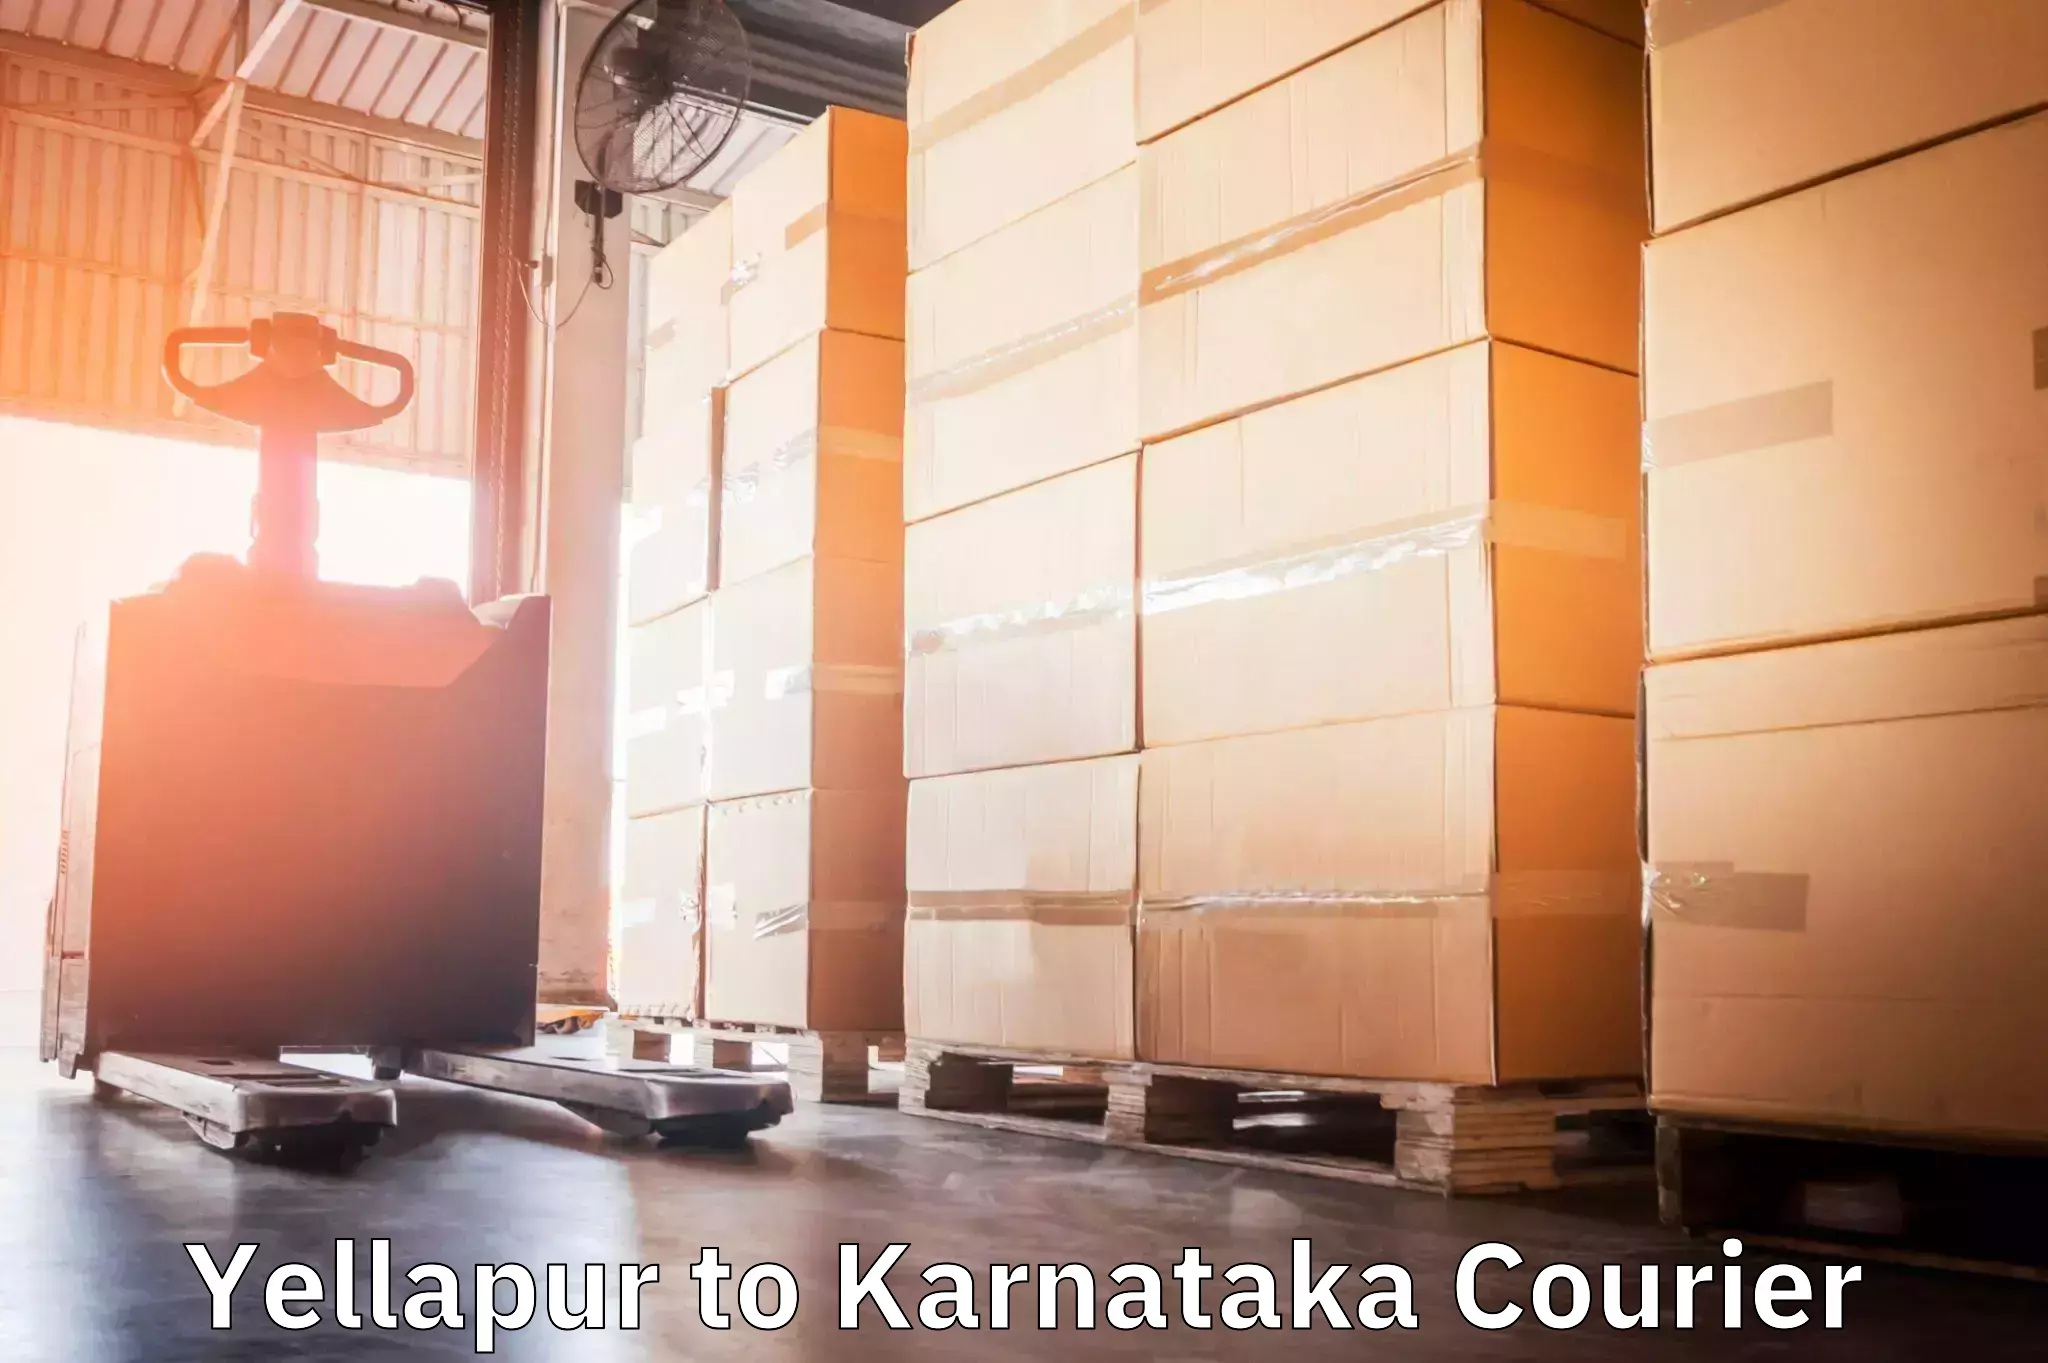 Cargo delivery service Yellapur to Karnataka